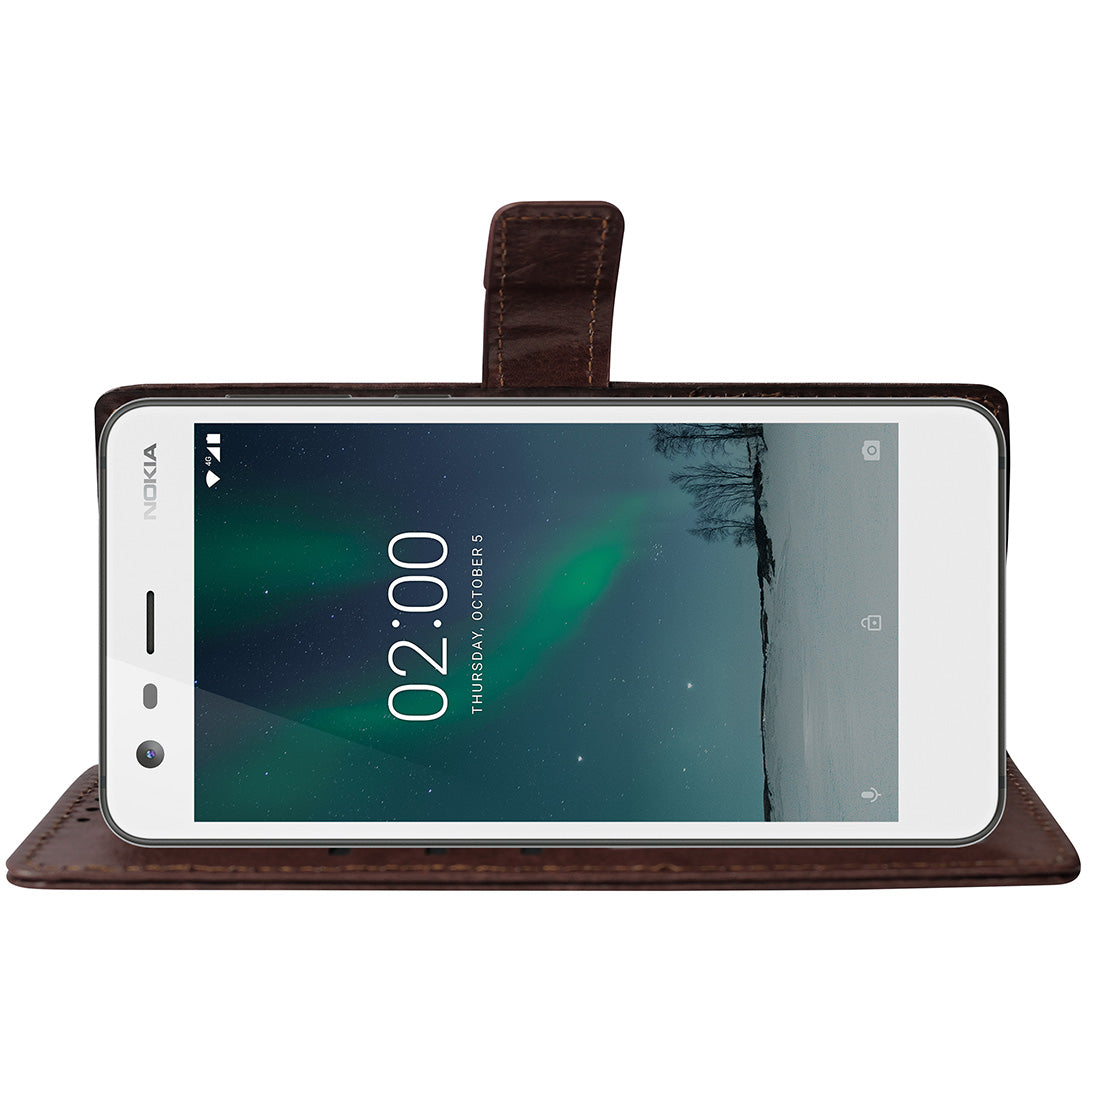 Premium Wallet Flip Cover for Nokia 2